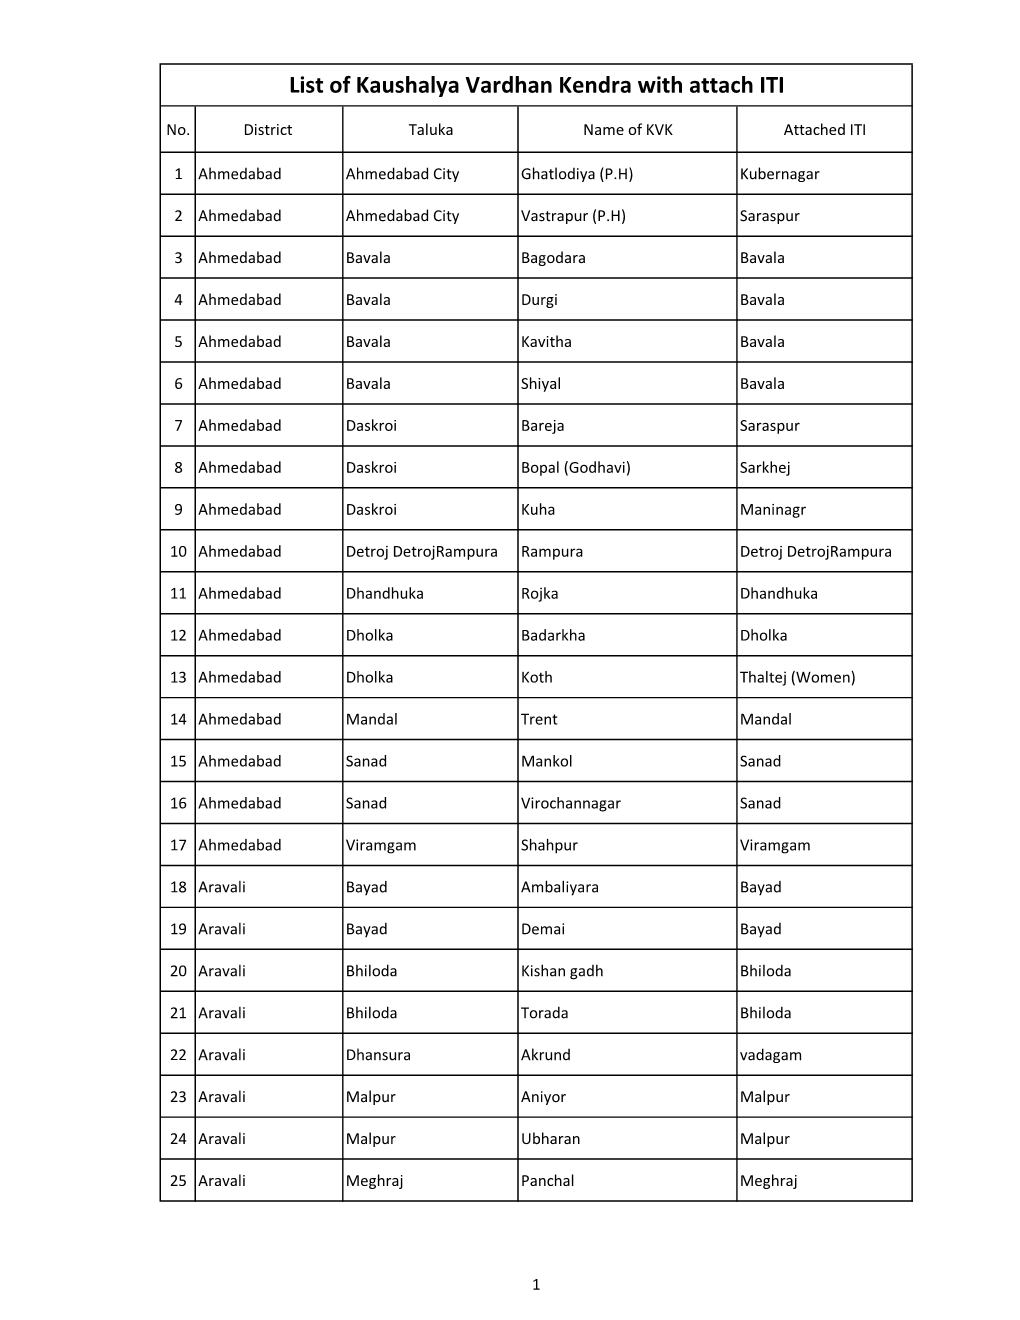 List of Kaushalya Vardhan Kendra with Attach ITI